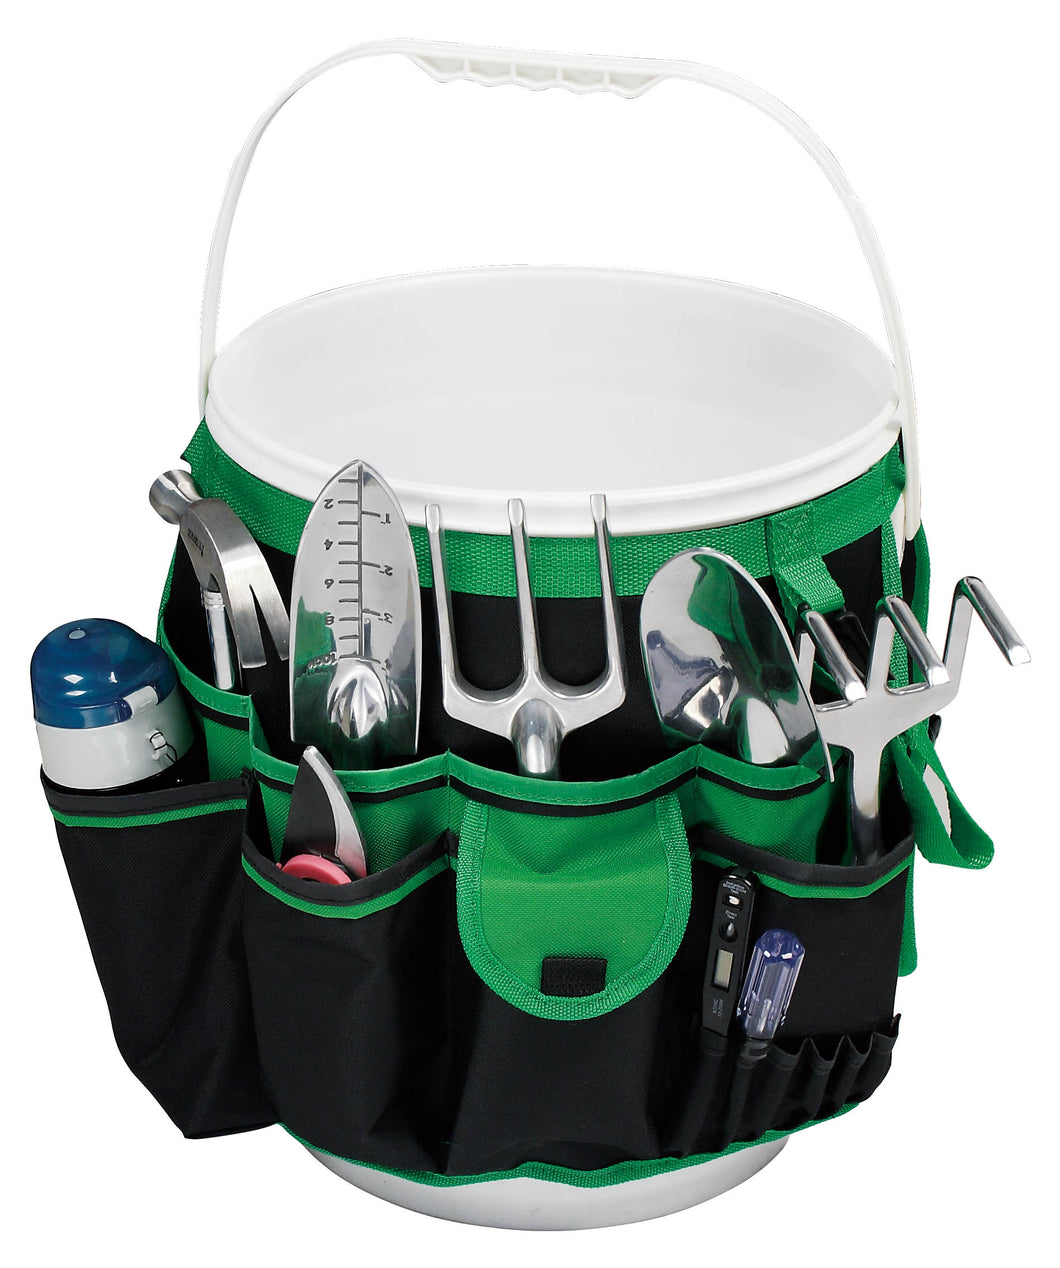 Bucket organizer converts bucket into storage with 34 pockets